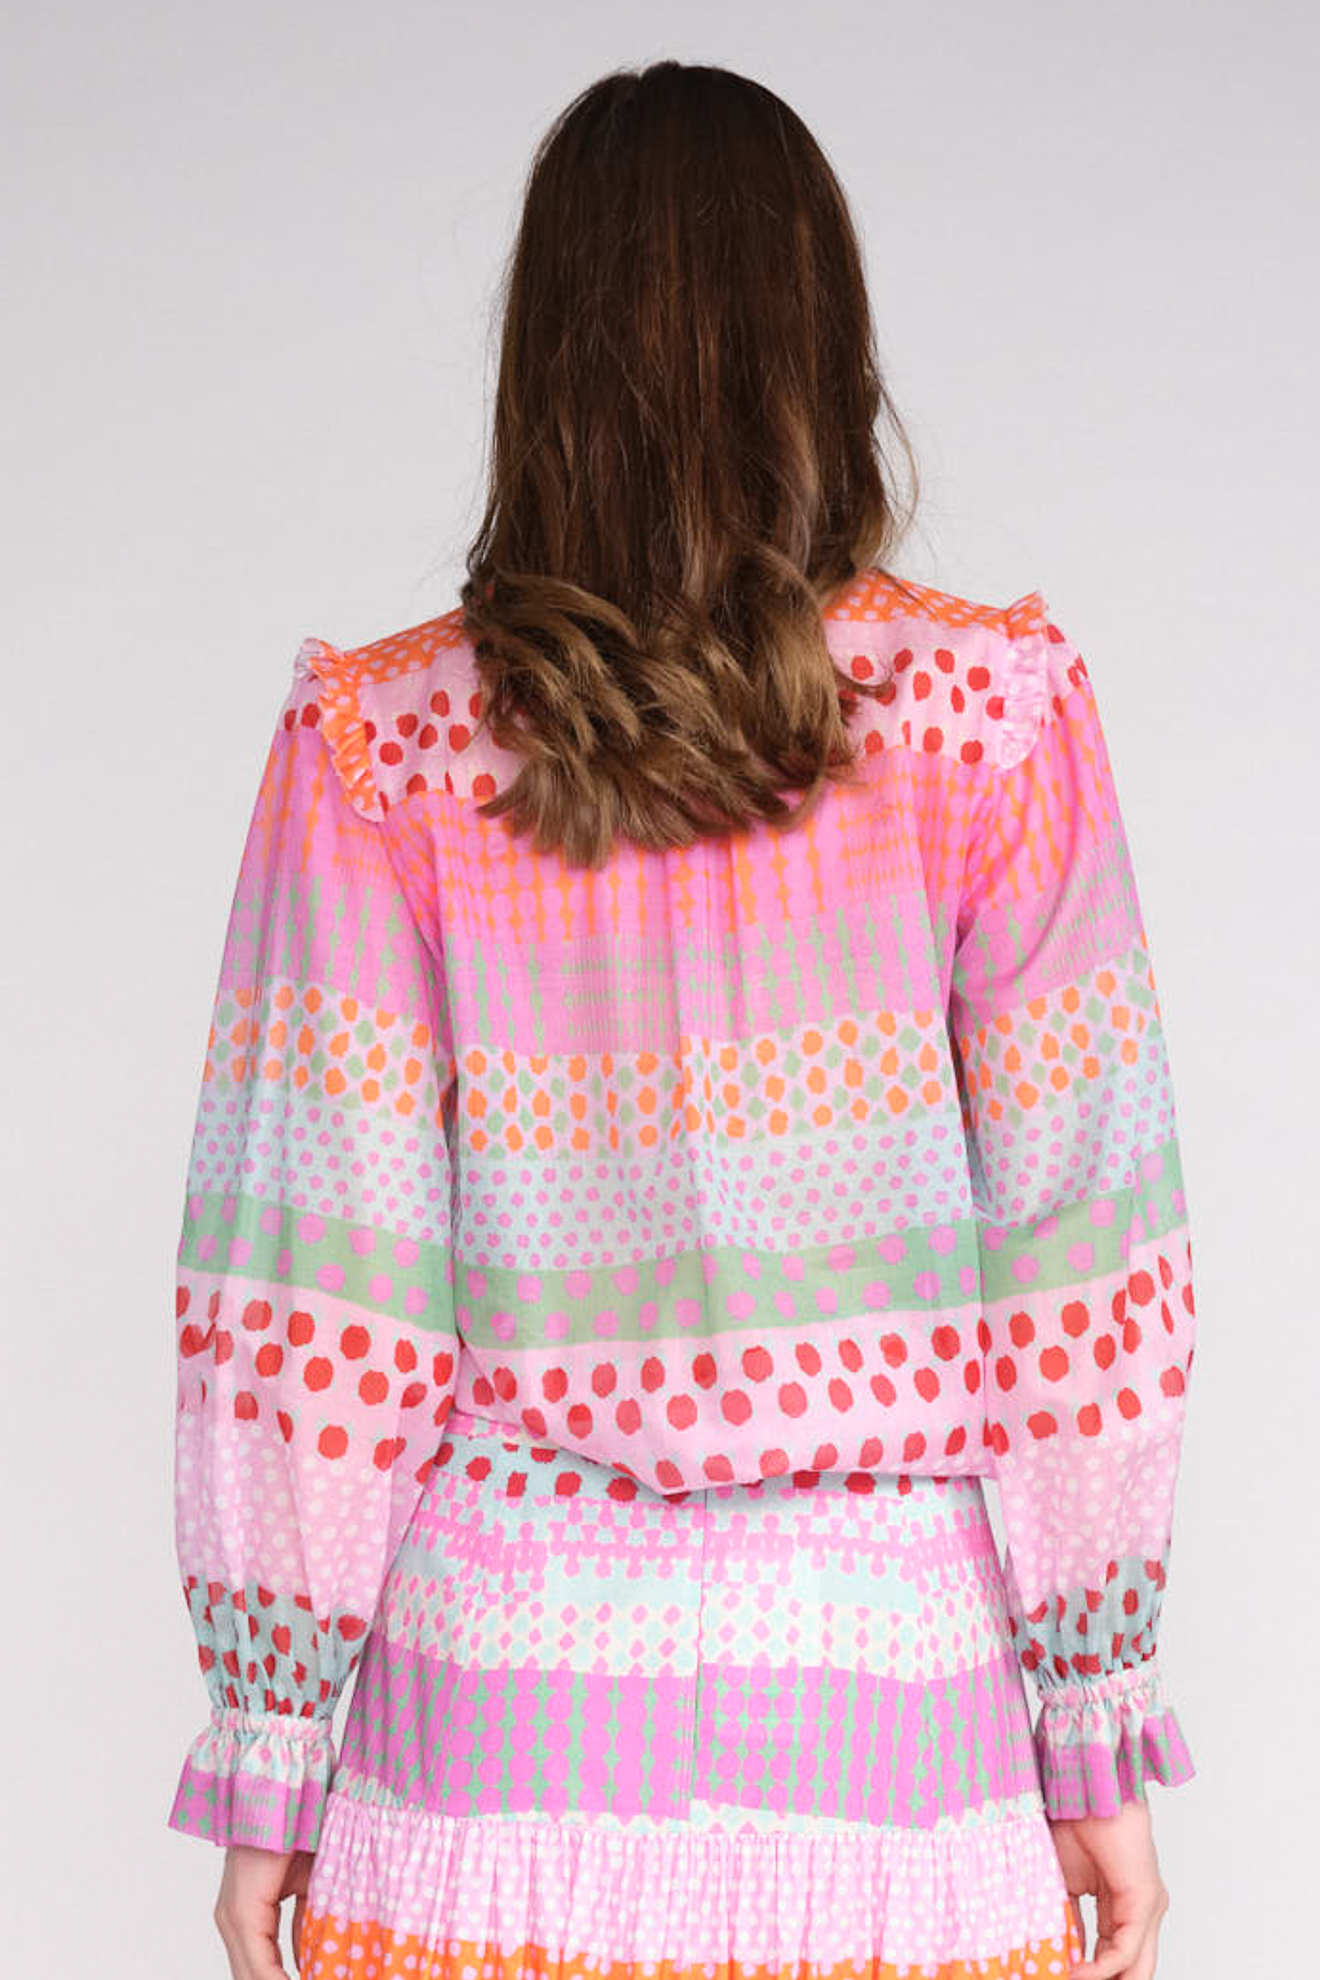 Maison Common Long sleeve colorful print blouse with ruffle details - Ruffle blouse with colorful print multi 36